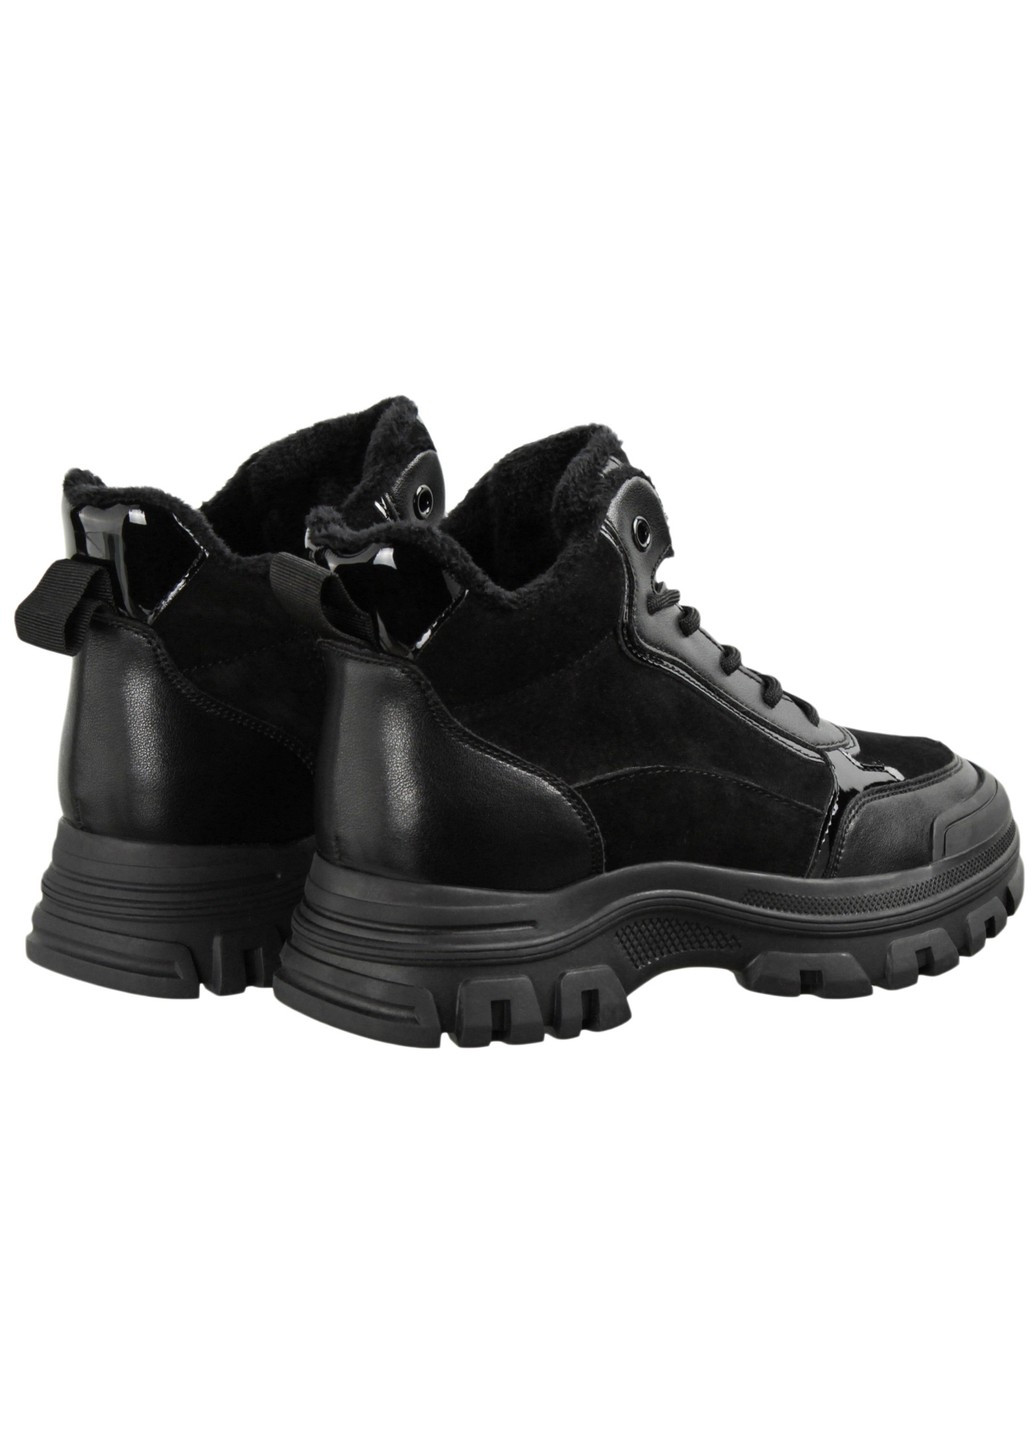 Зимние женские ботинки на низком ходу 199862 Buts